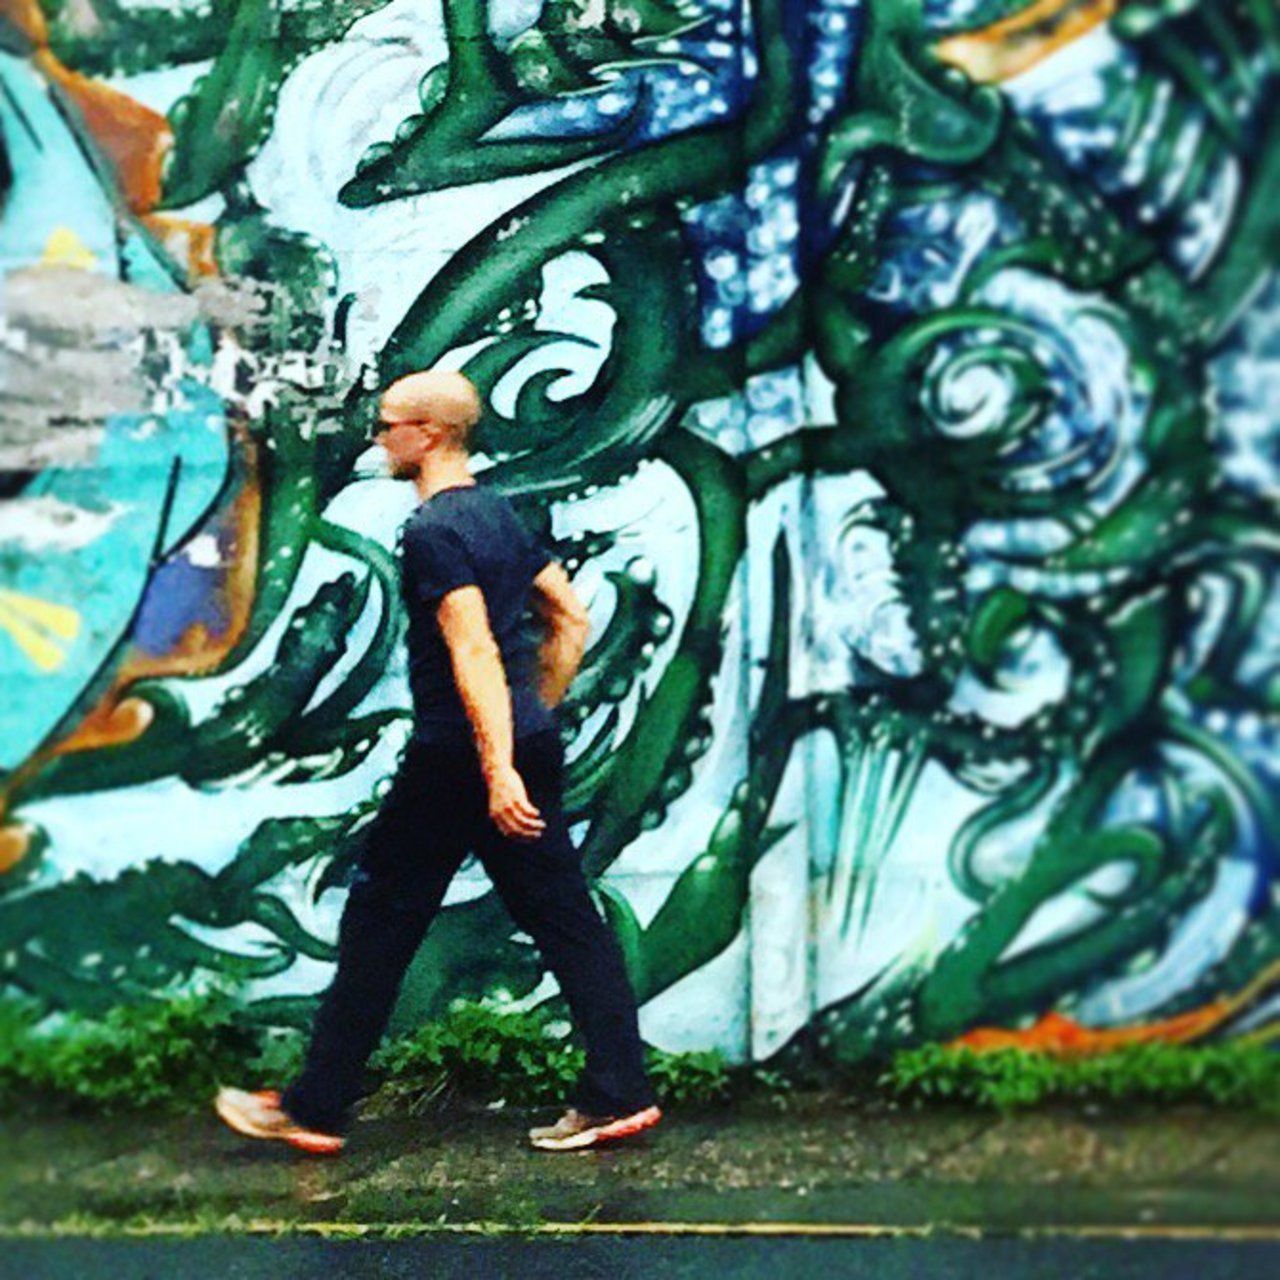 #walking down #graffiti #street in #SanJose #CostaRica #streetart #streetphotography #urban https://t.co/U4glJmnGUE